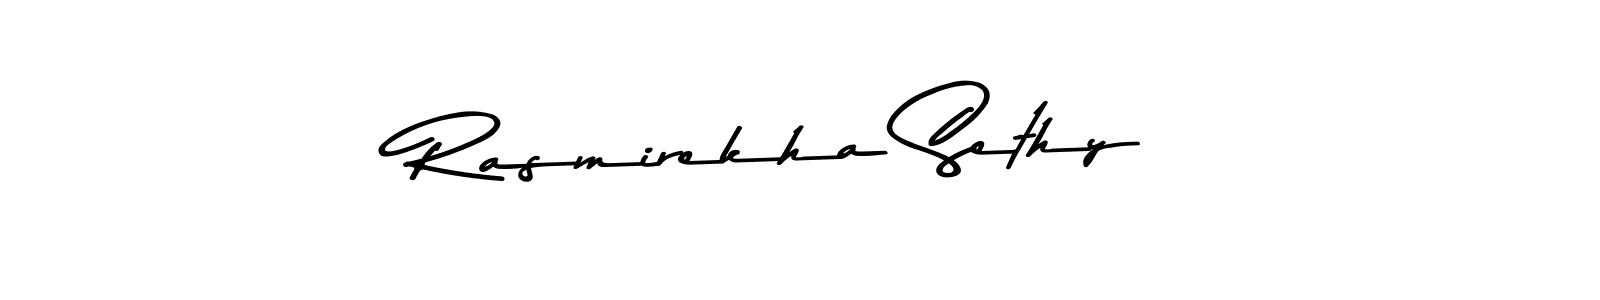 How to Draw Rasmirekha Sethy signature style? Asem Kandis PERSONAL USE is a latest design signature styles for name Rasmirekha Sethy. Rasmirekha Sethy signature style 9 images and pictures png